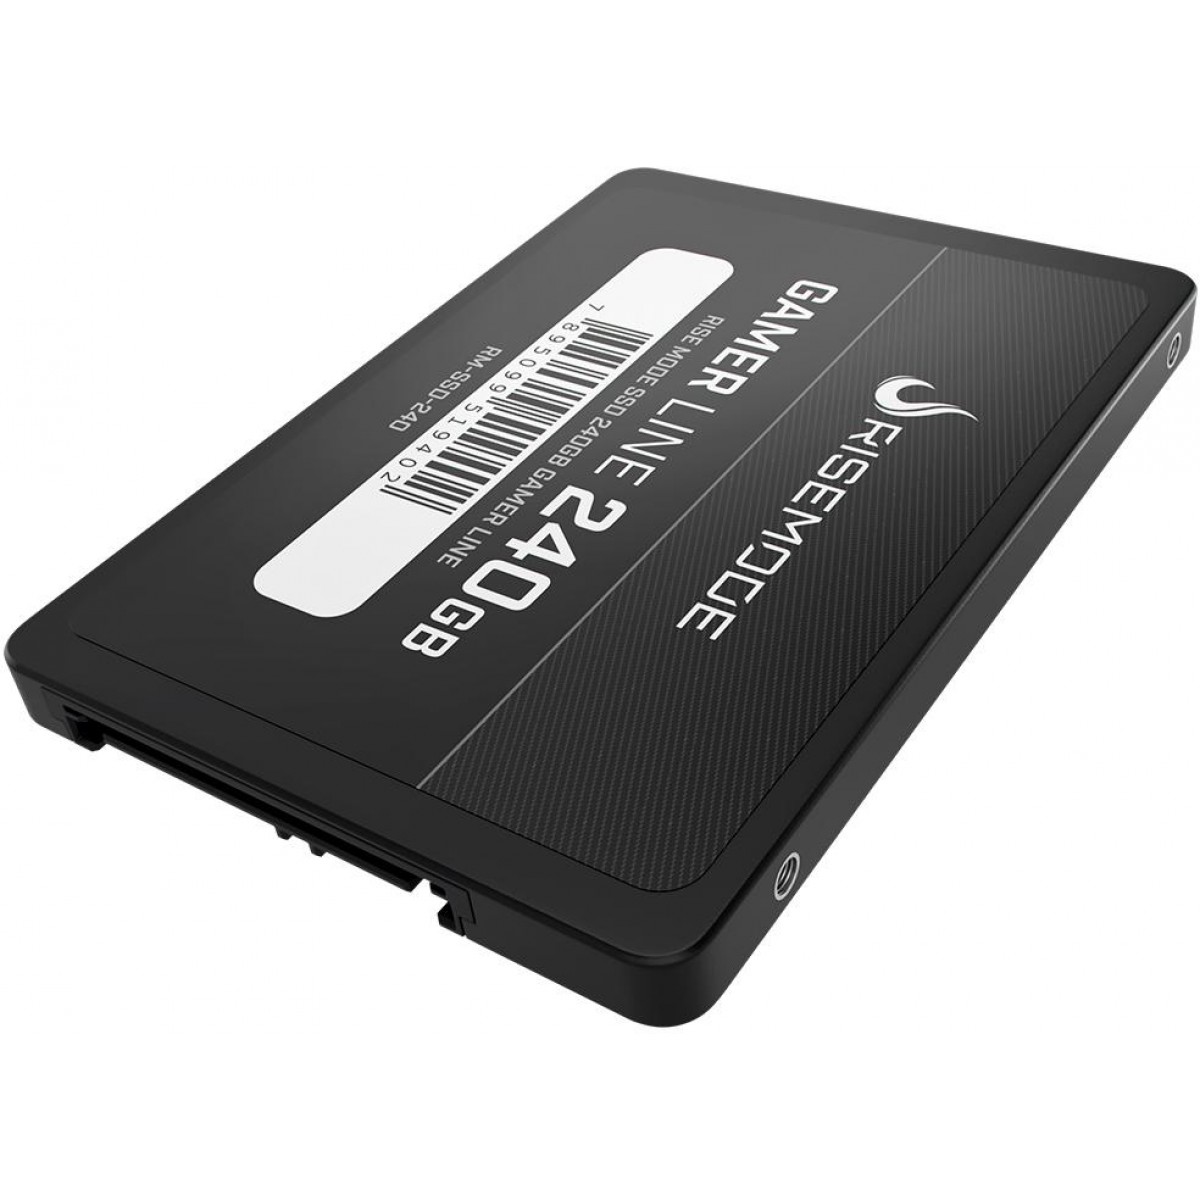 SSD Rise Mode Gamer Line, 240GB, Sata III, Leitura 535MBs e Gravação 435MBs, RM-SSD-240